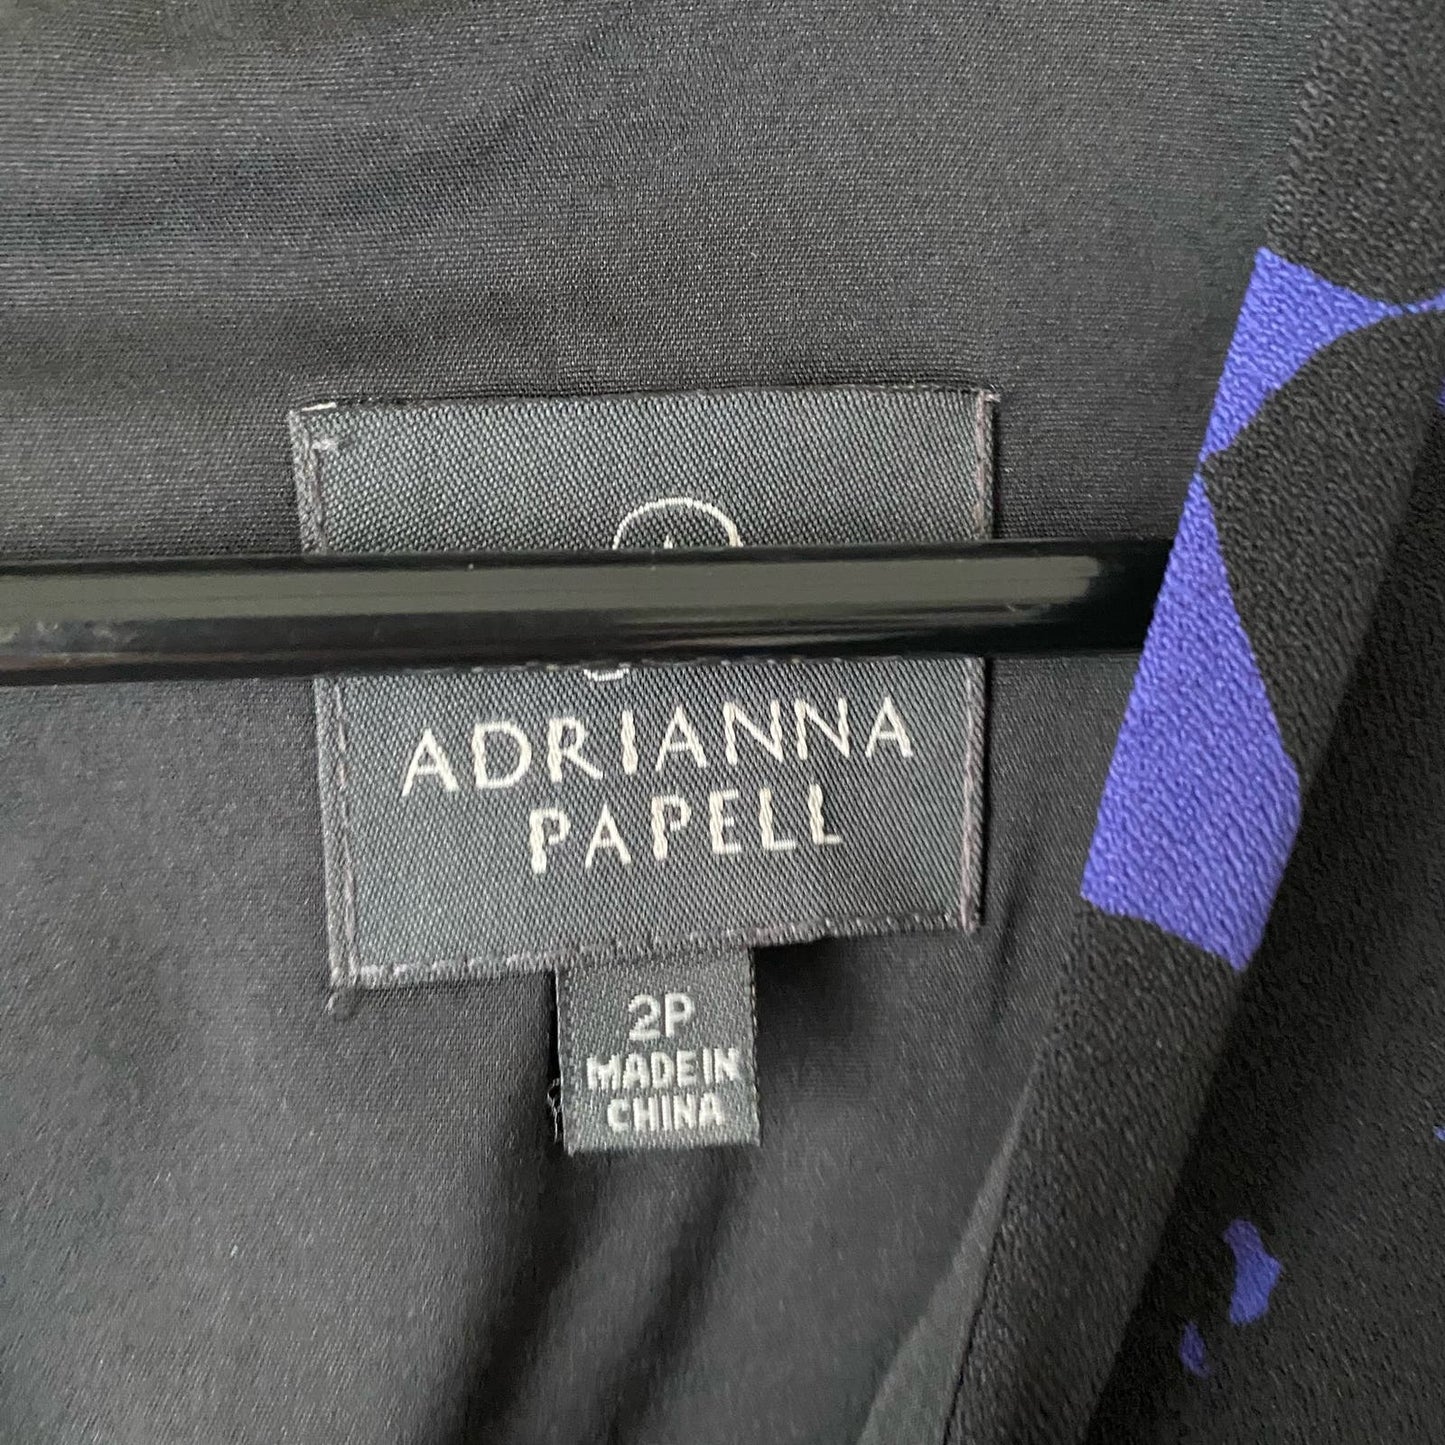 Adrianna Papell size 2 black and blue short sleeve sheath dress